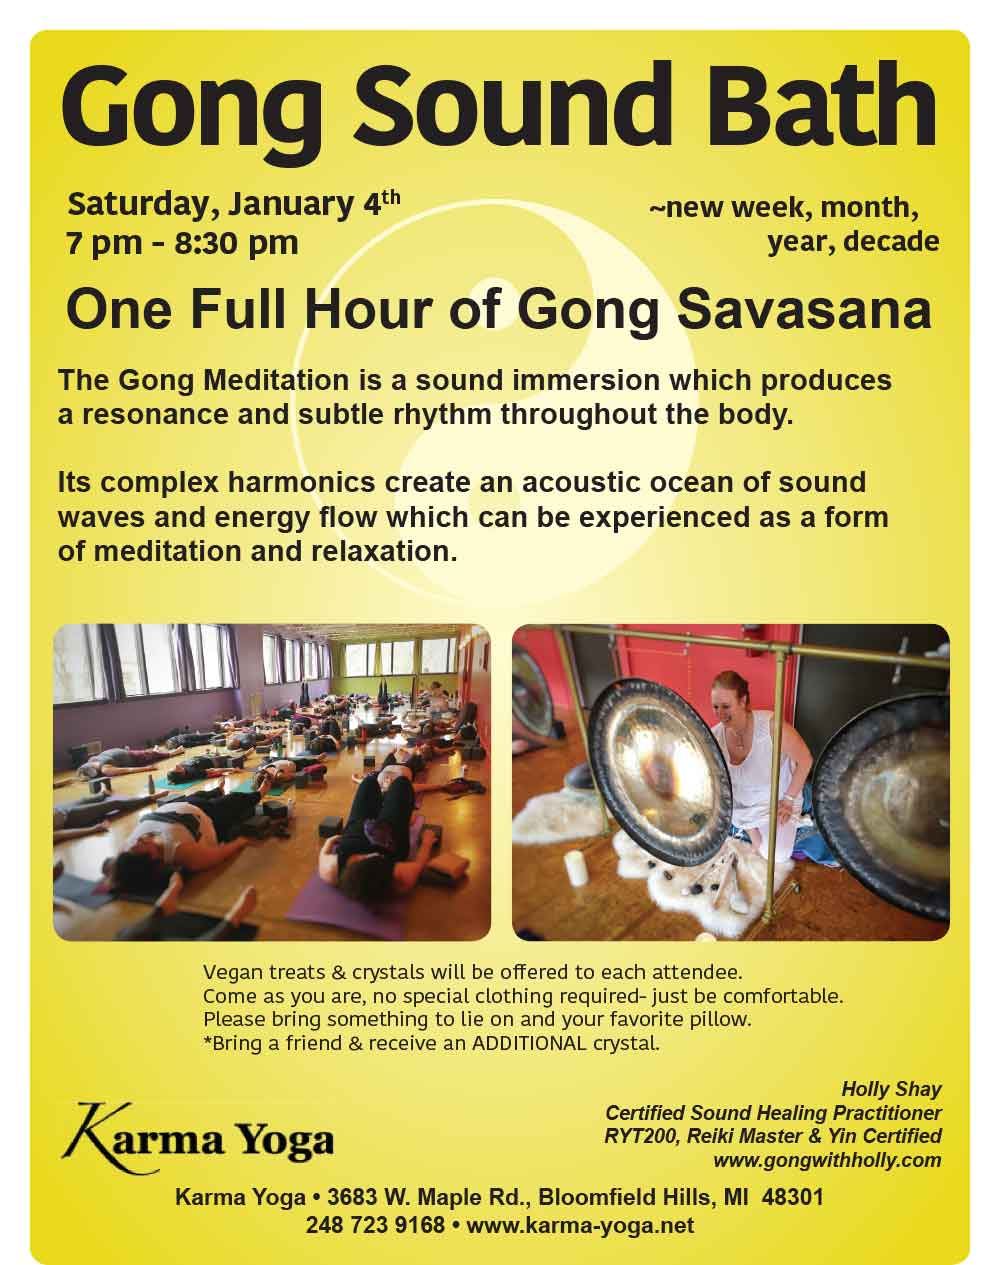 Gong Sound Bath, January 4, 7pm, Karma Yoga, Bloomfield Hills, MI